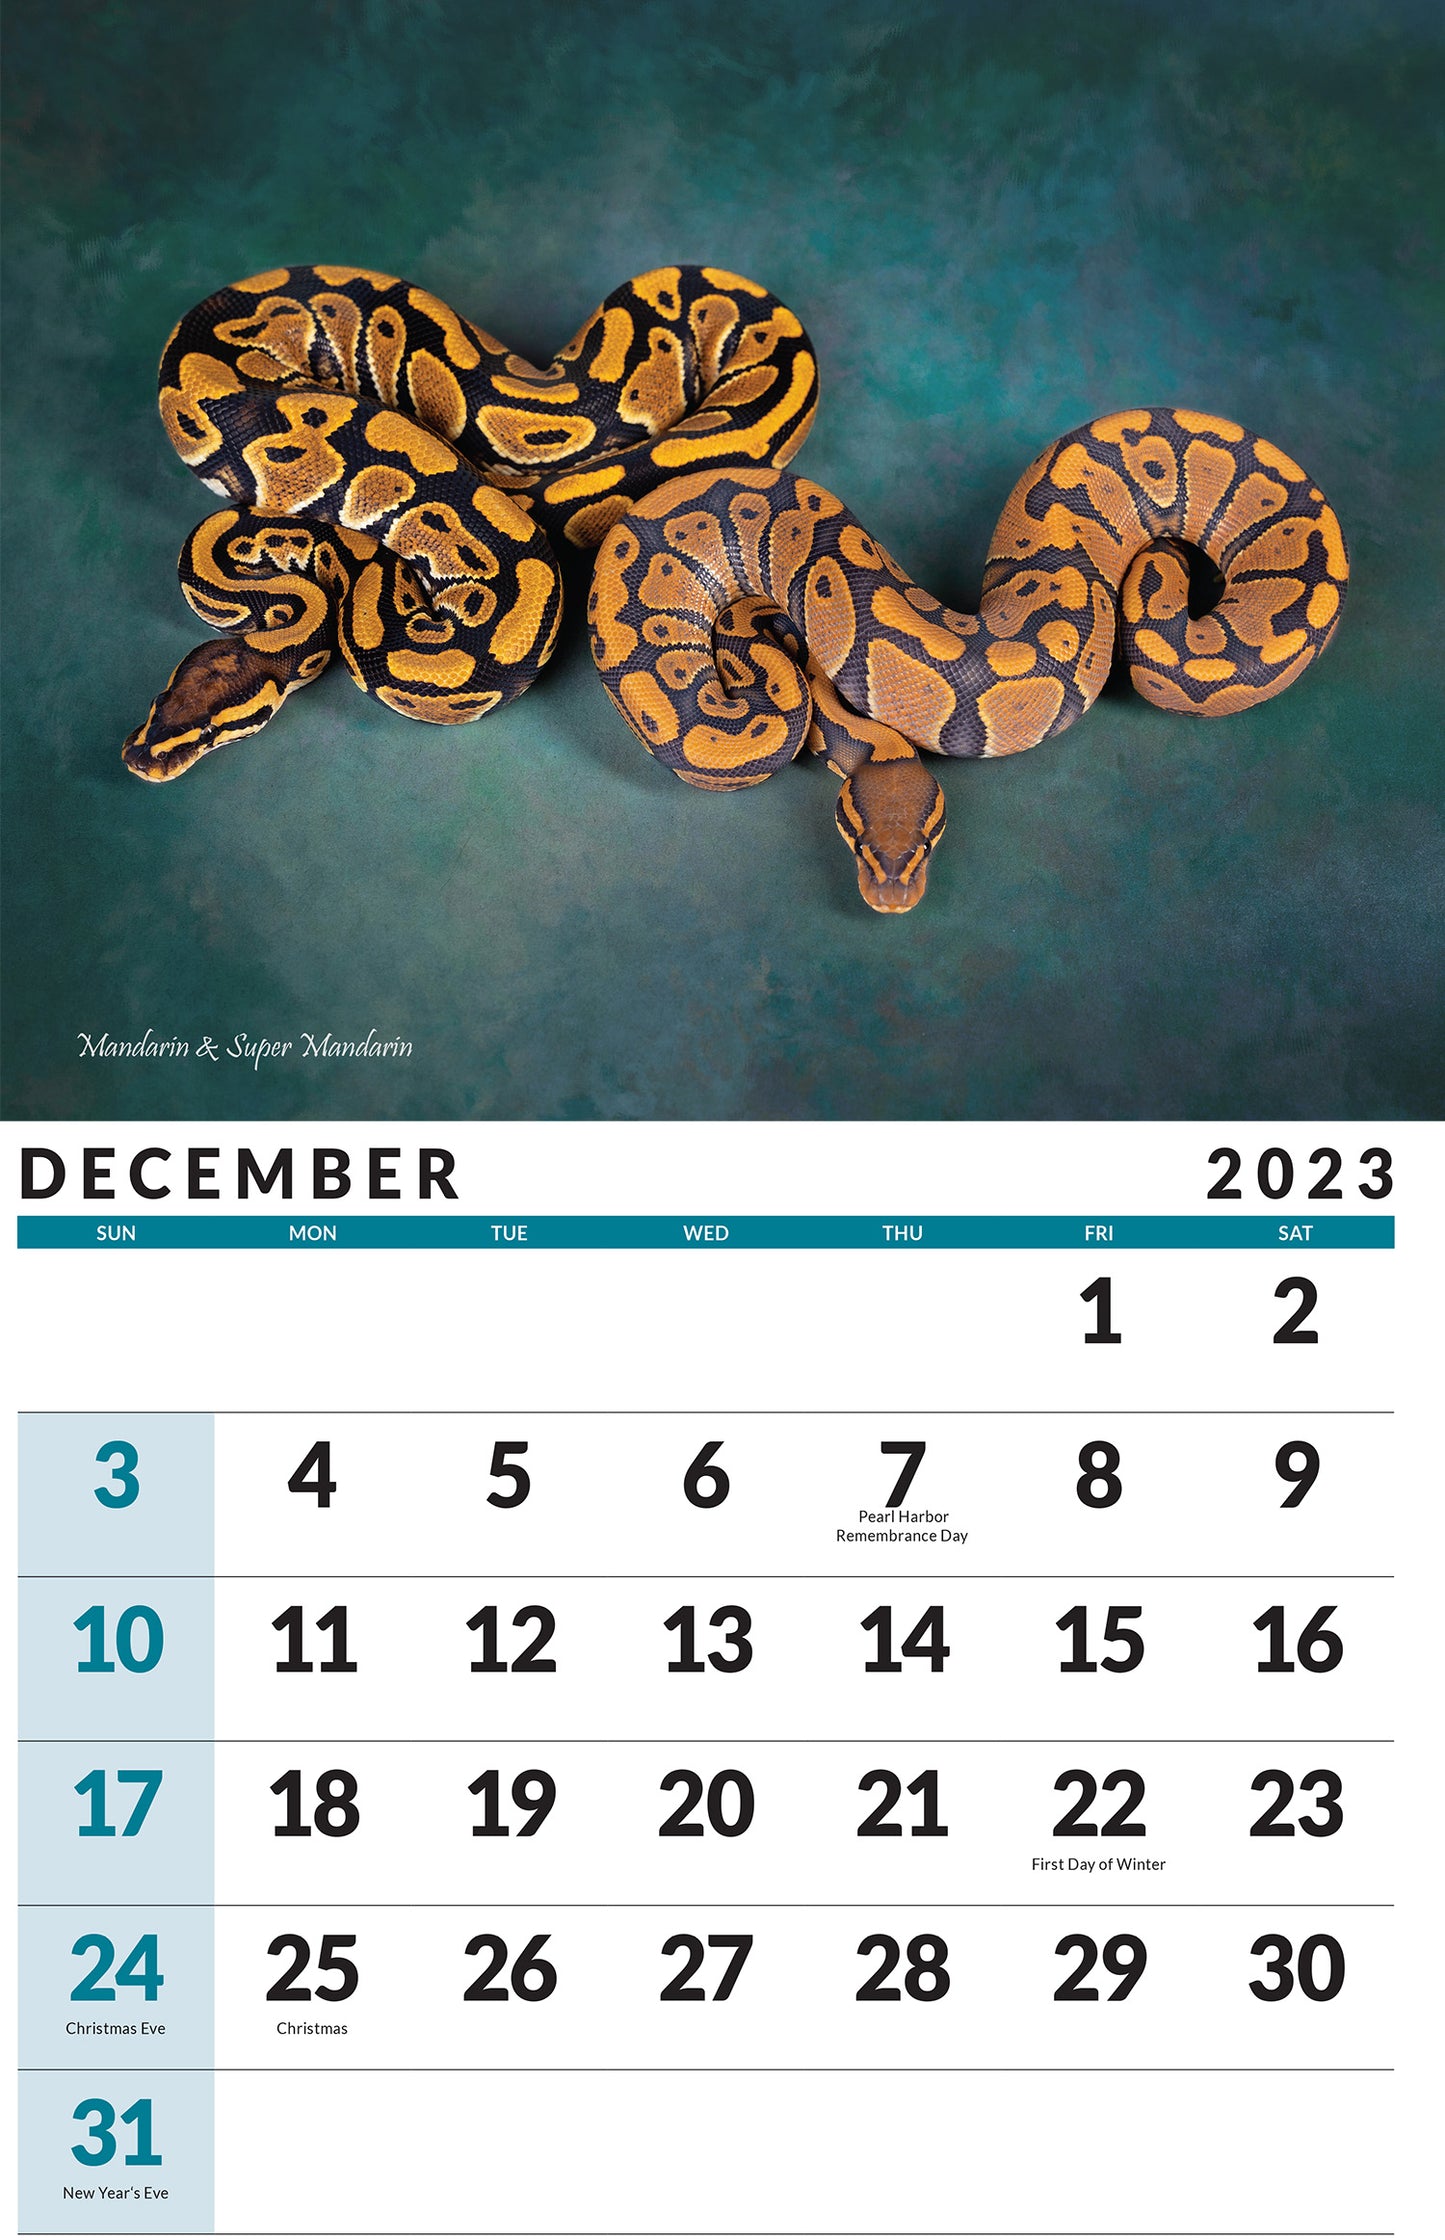 2023 Ball Python Calendar